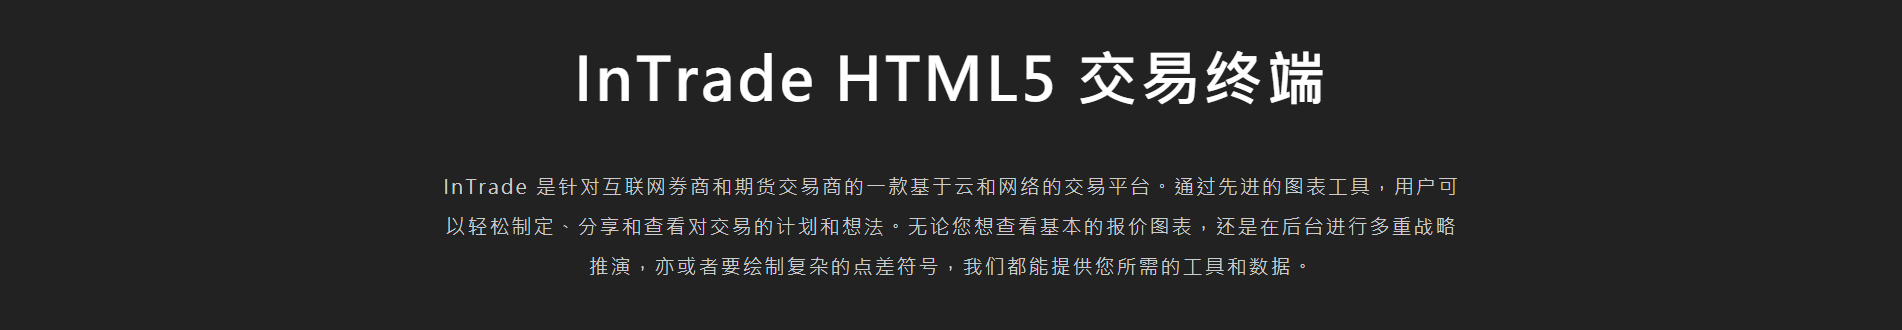 HTML5 交易终端